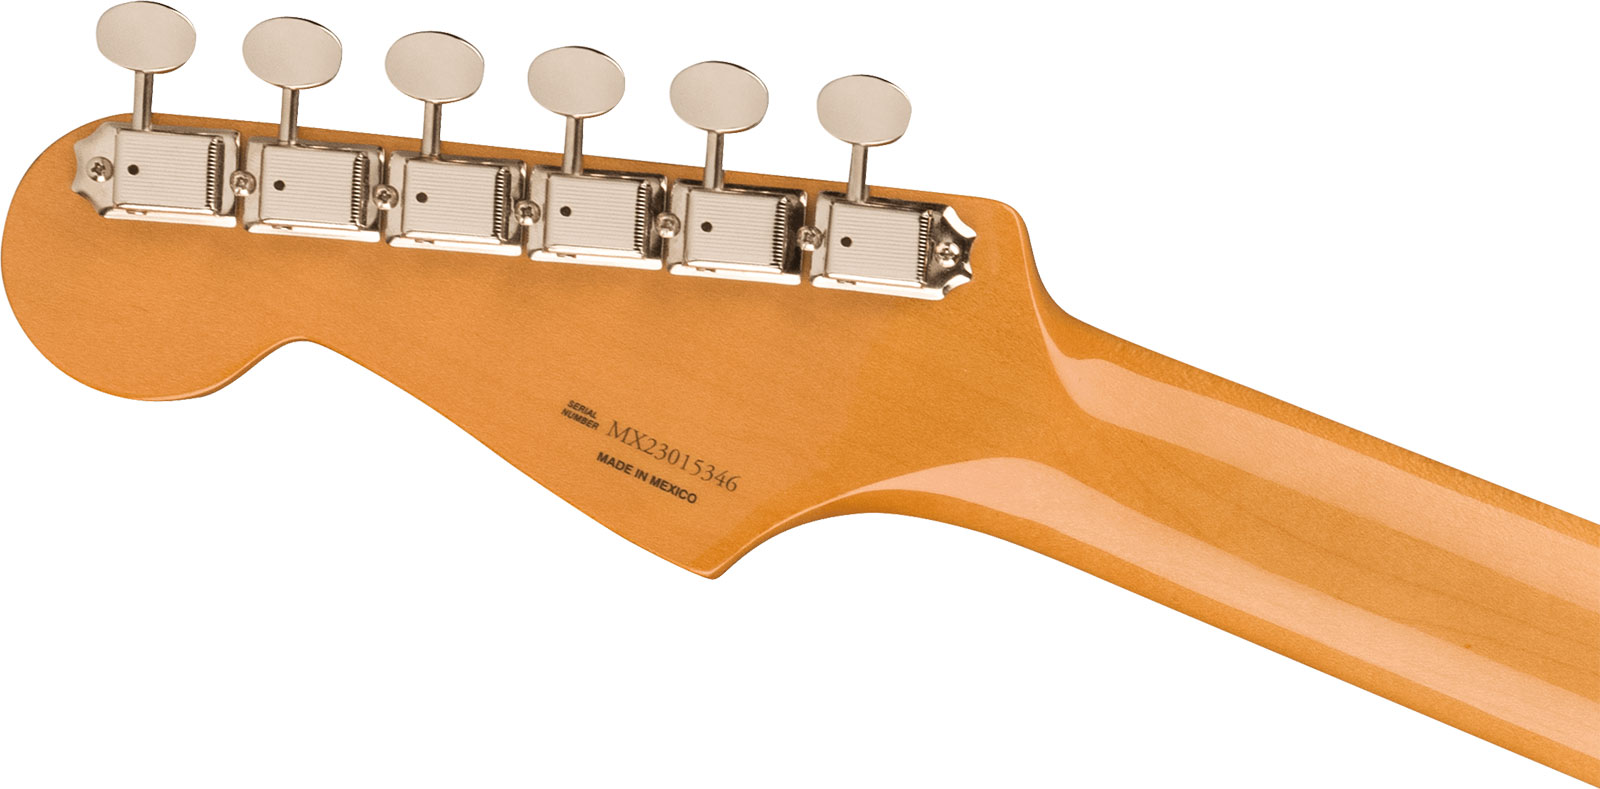 Fender Strat 60s Vintera 2 Mex 3s Trem Rw - 3-color Sunburst - Str shape electric guitar - Variation 3